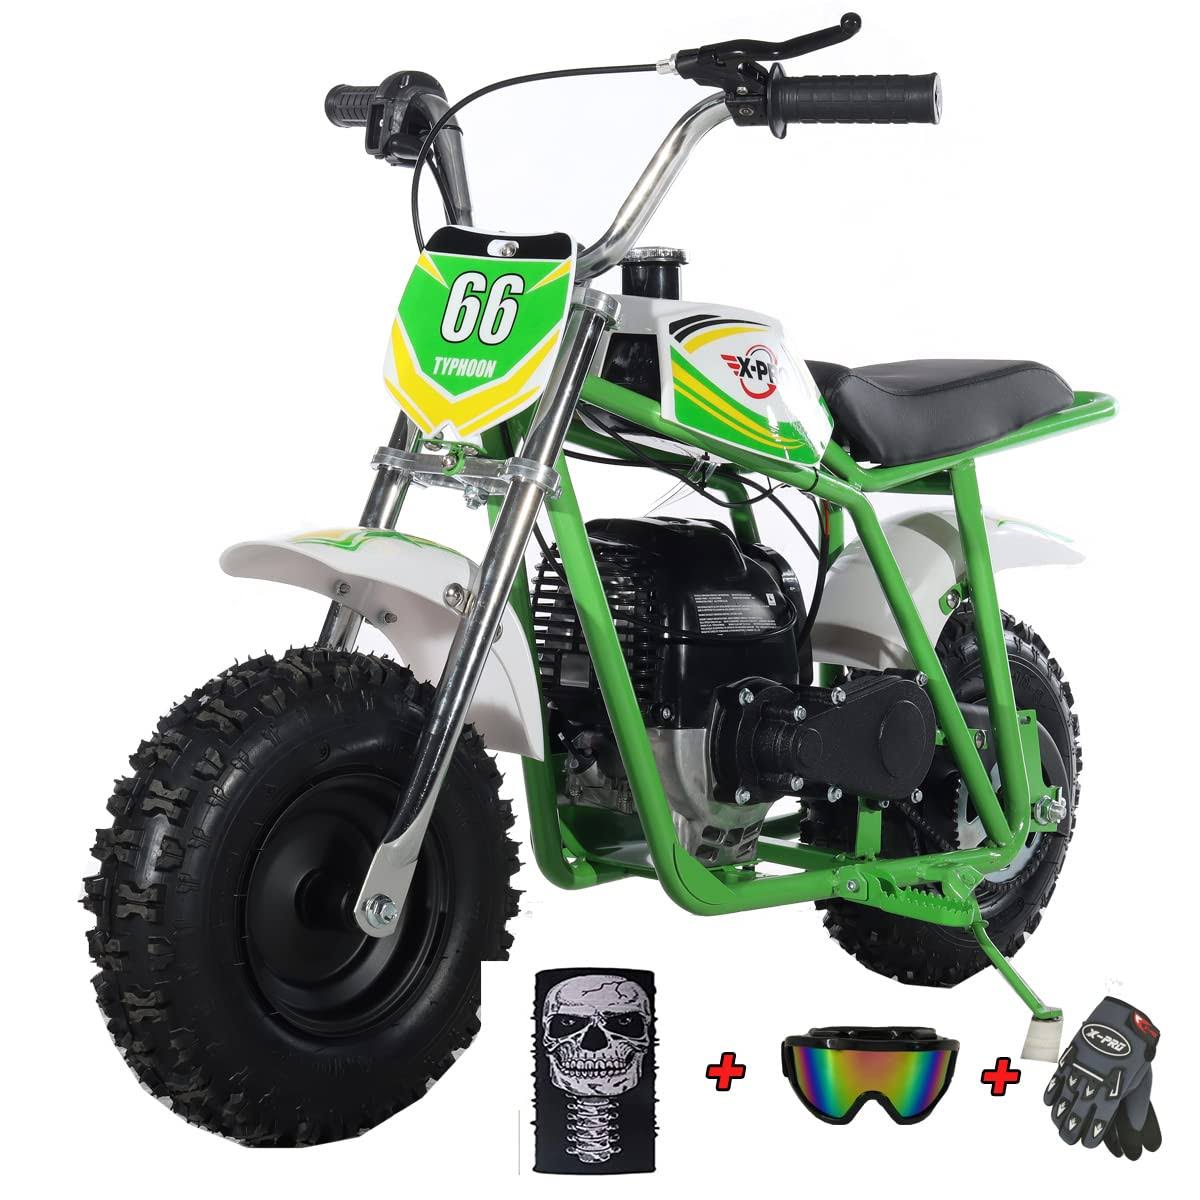 X-Pro 40cc Mini Dirt Bike Pit Bike GAS Power Bike Off Road Motorcycle,Green